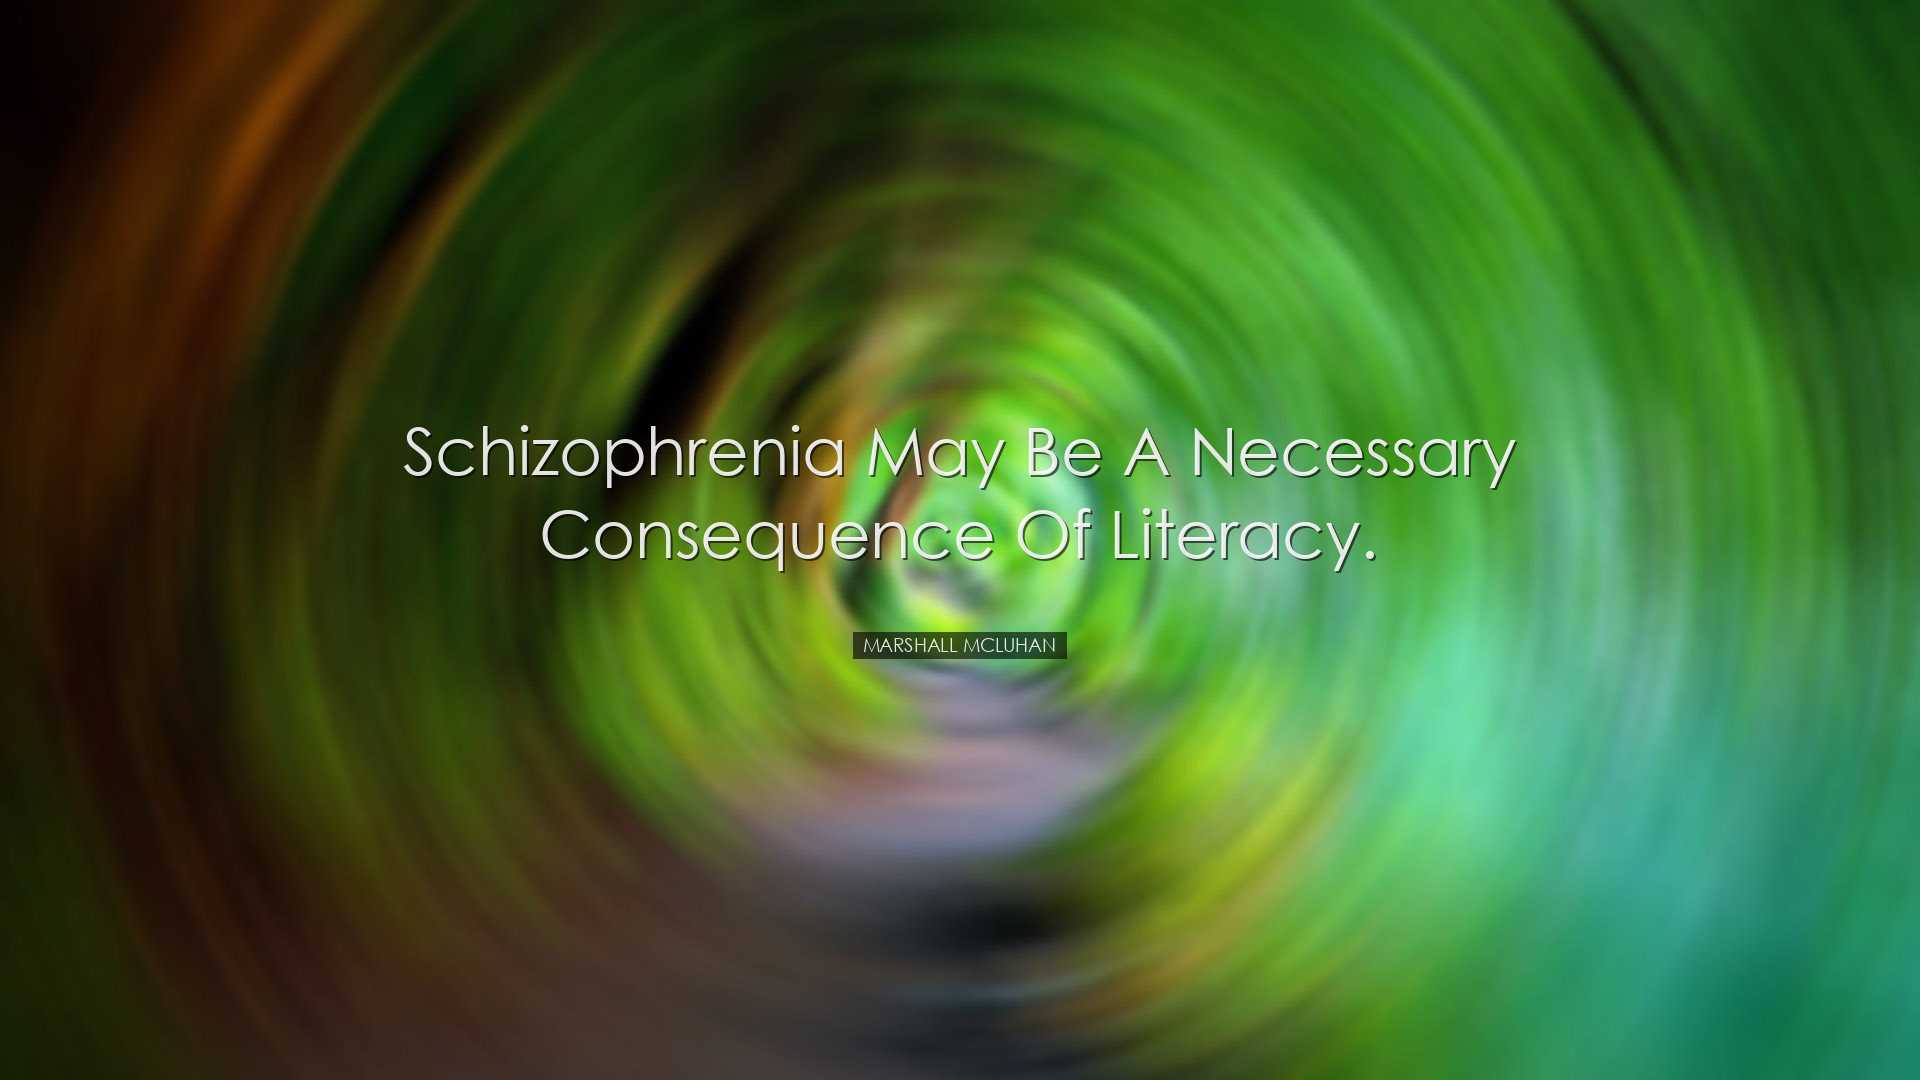 Schizophrenia may be a necessary consequence of literacy. - Marsha